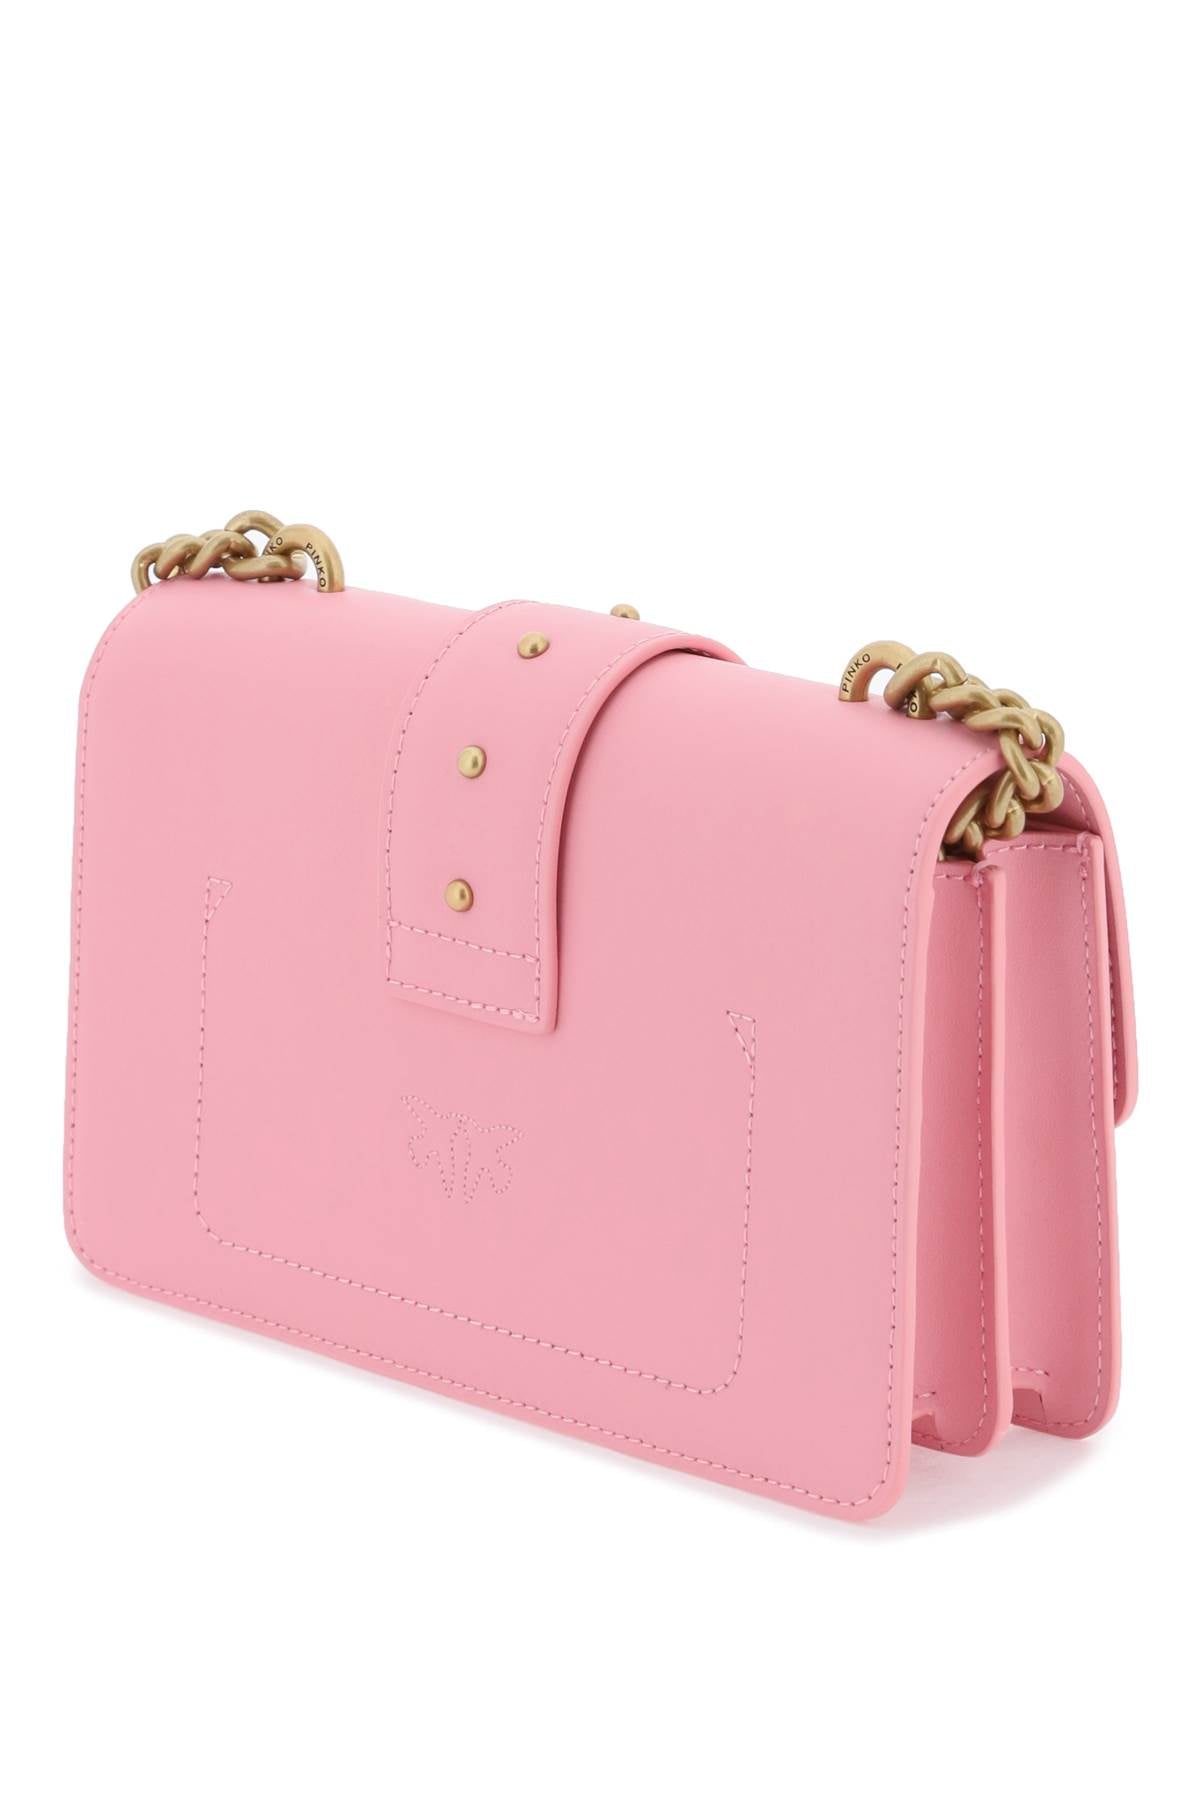 Pinko classic love icon simply bag-1